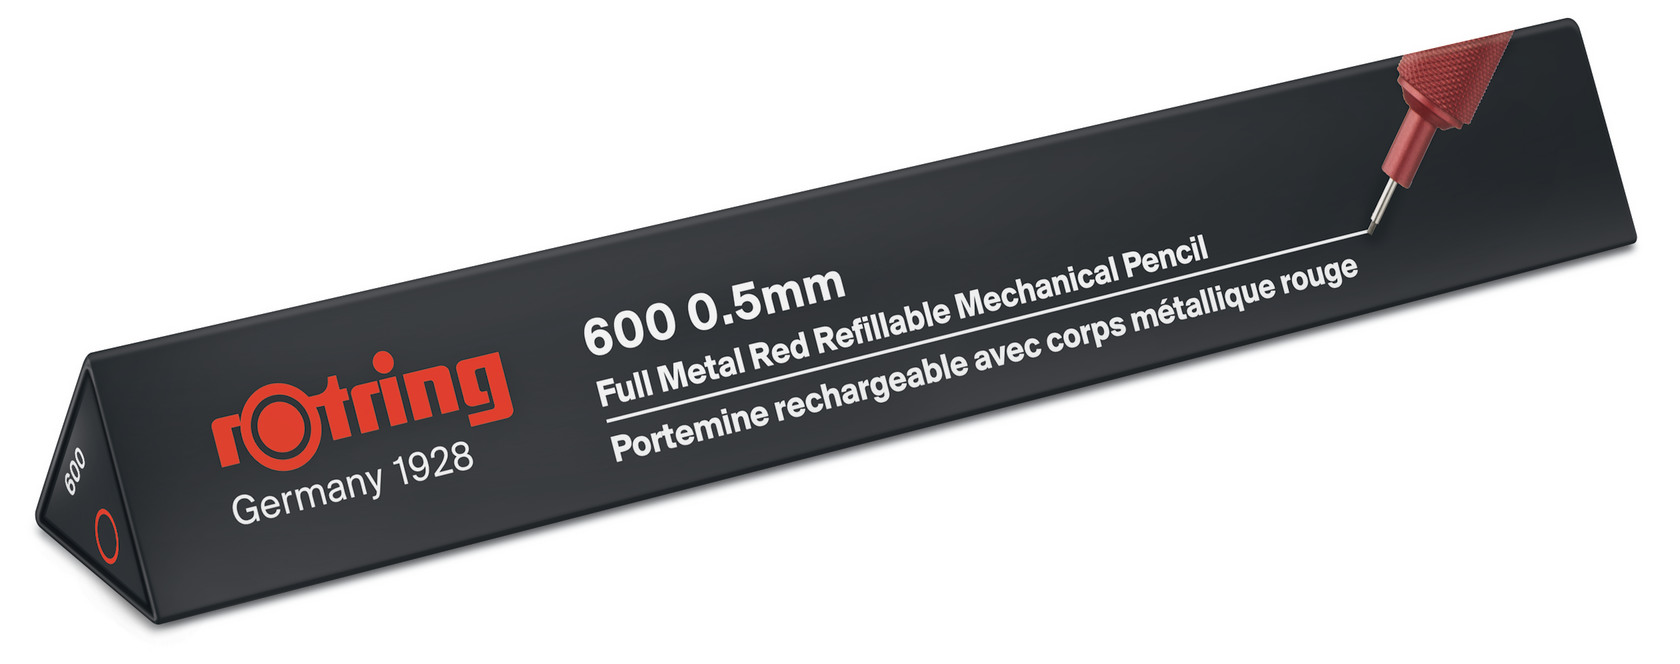 ROTRING Portemines 600 0.5mm 2114264 rouge metallic